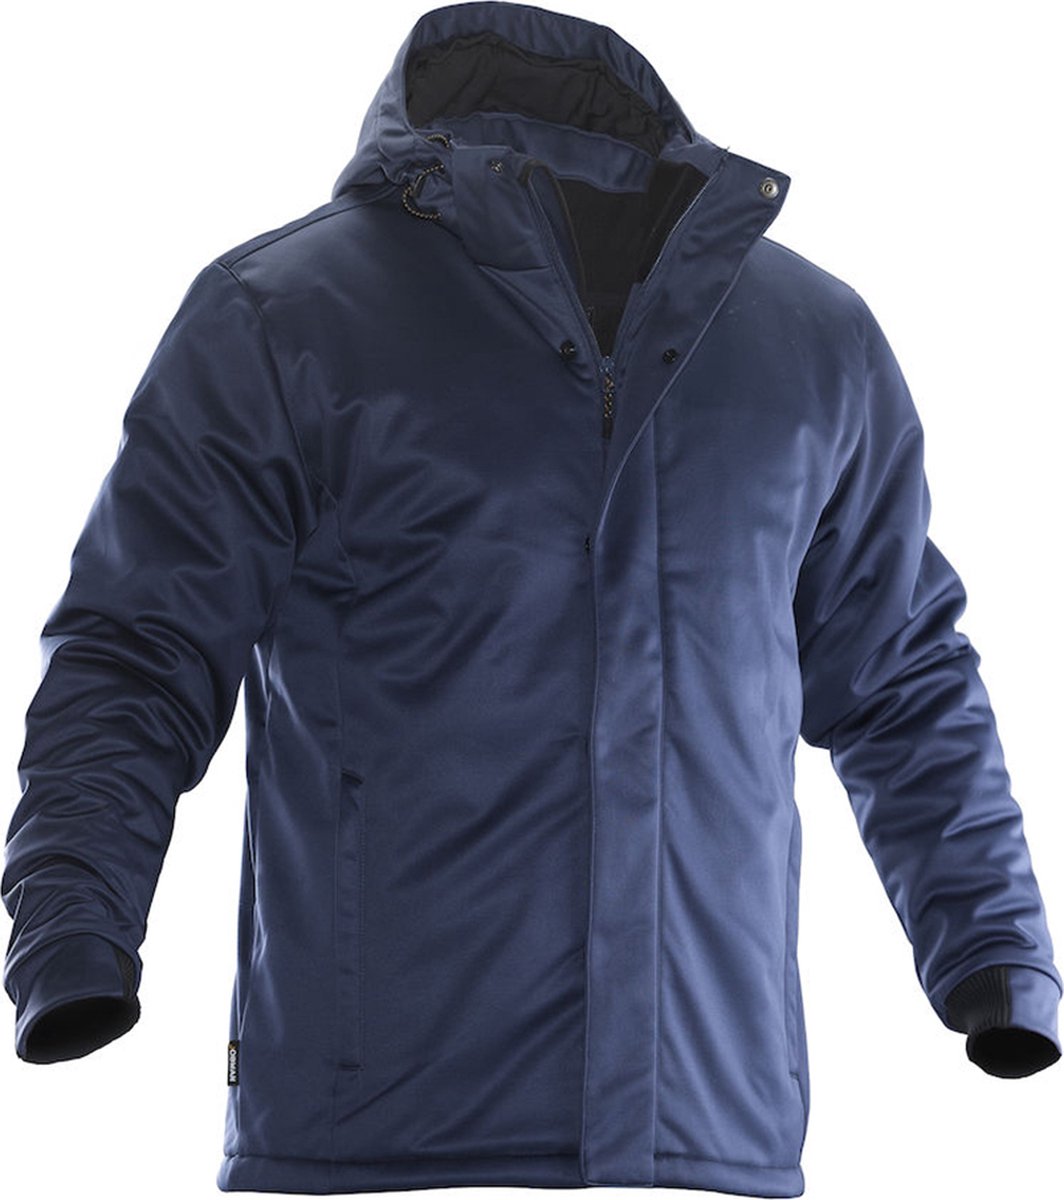 Jobman 1040 Winter Jacket Softshell 65104078 - Navy - XS